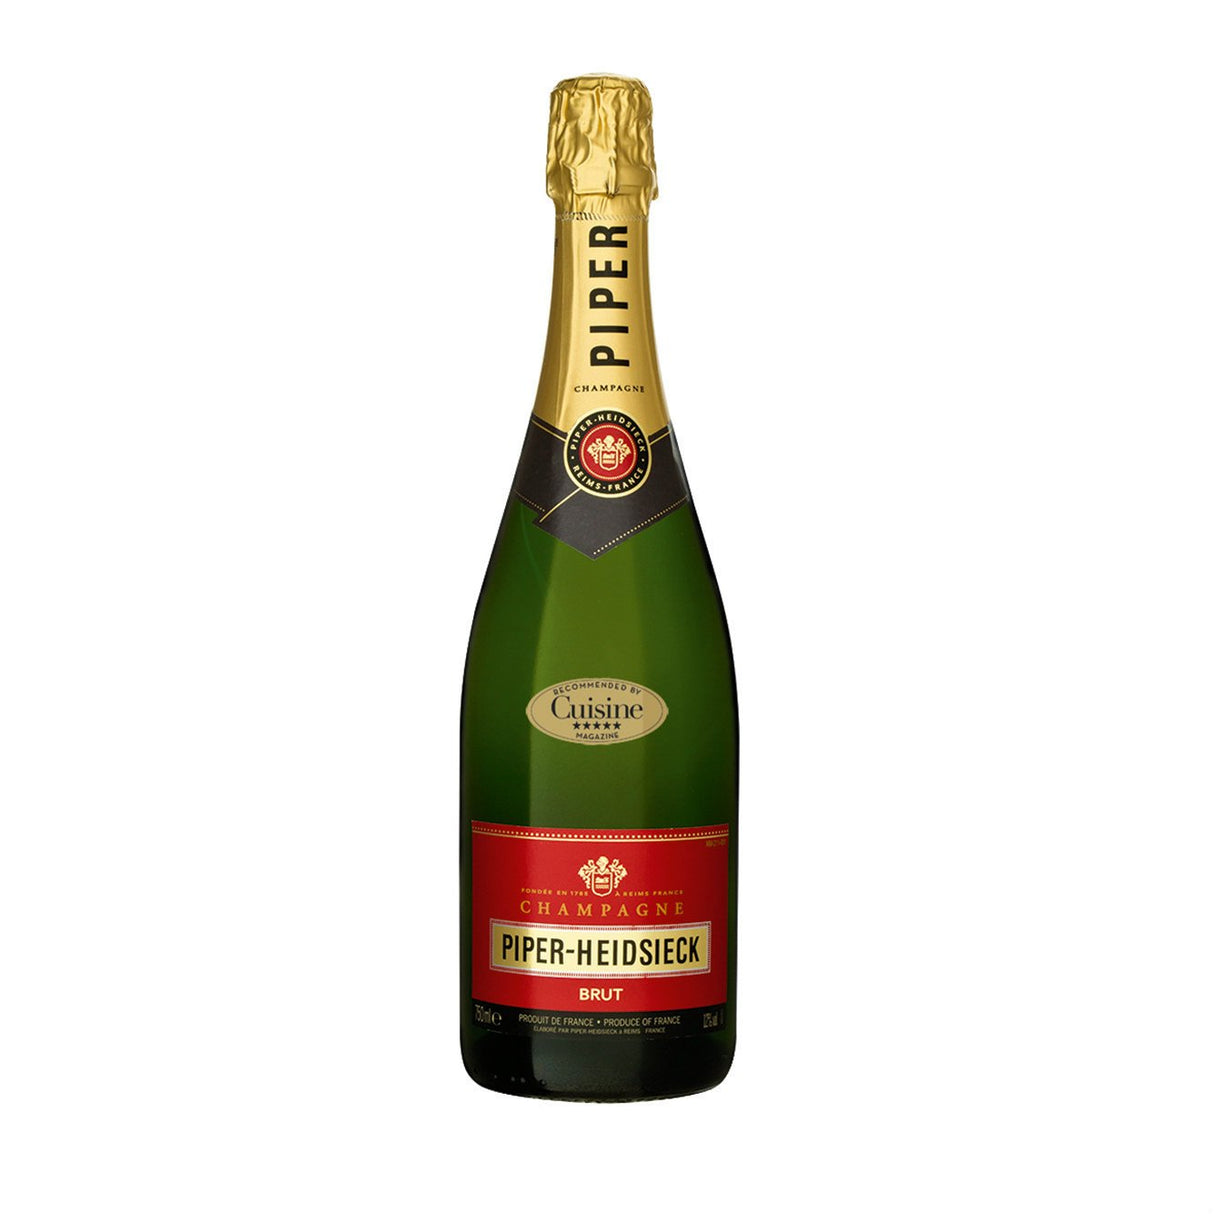 Piper-Heidsieck Champagne Cuvee Brut - De Wine Spot | DWS - Drams/Whiskey, Wines, Sake